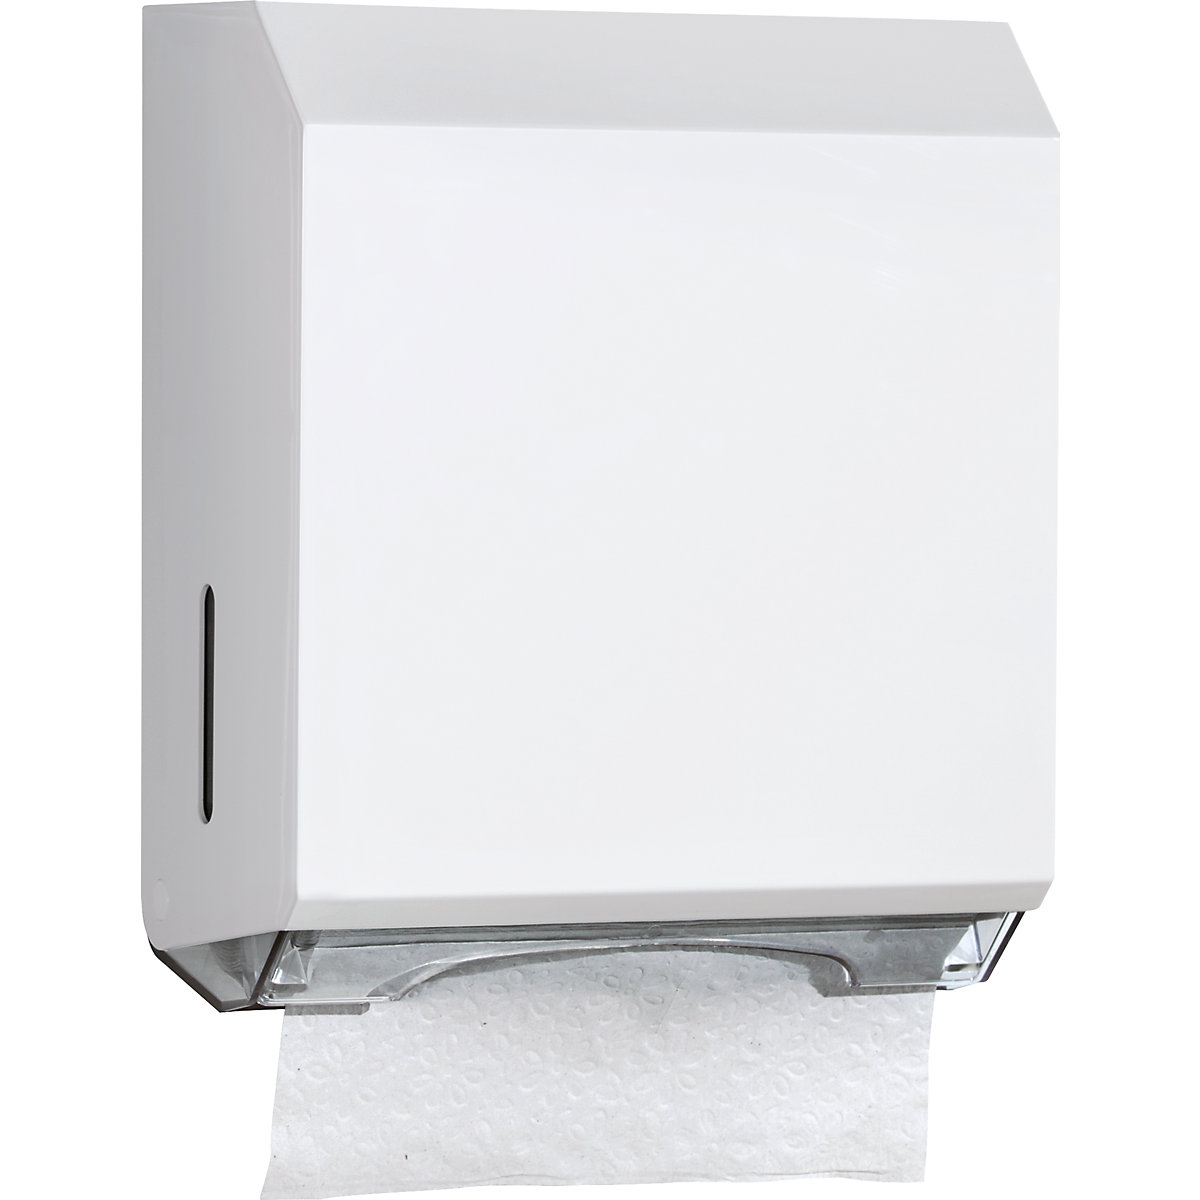 Novoclean paper hand towel dispenser, white – CWS